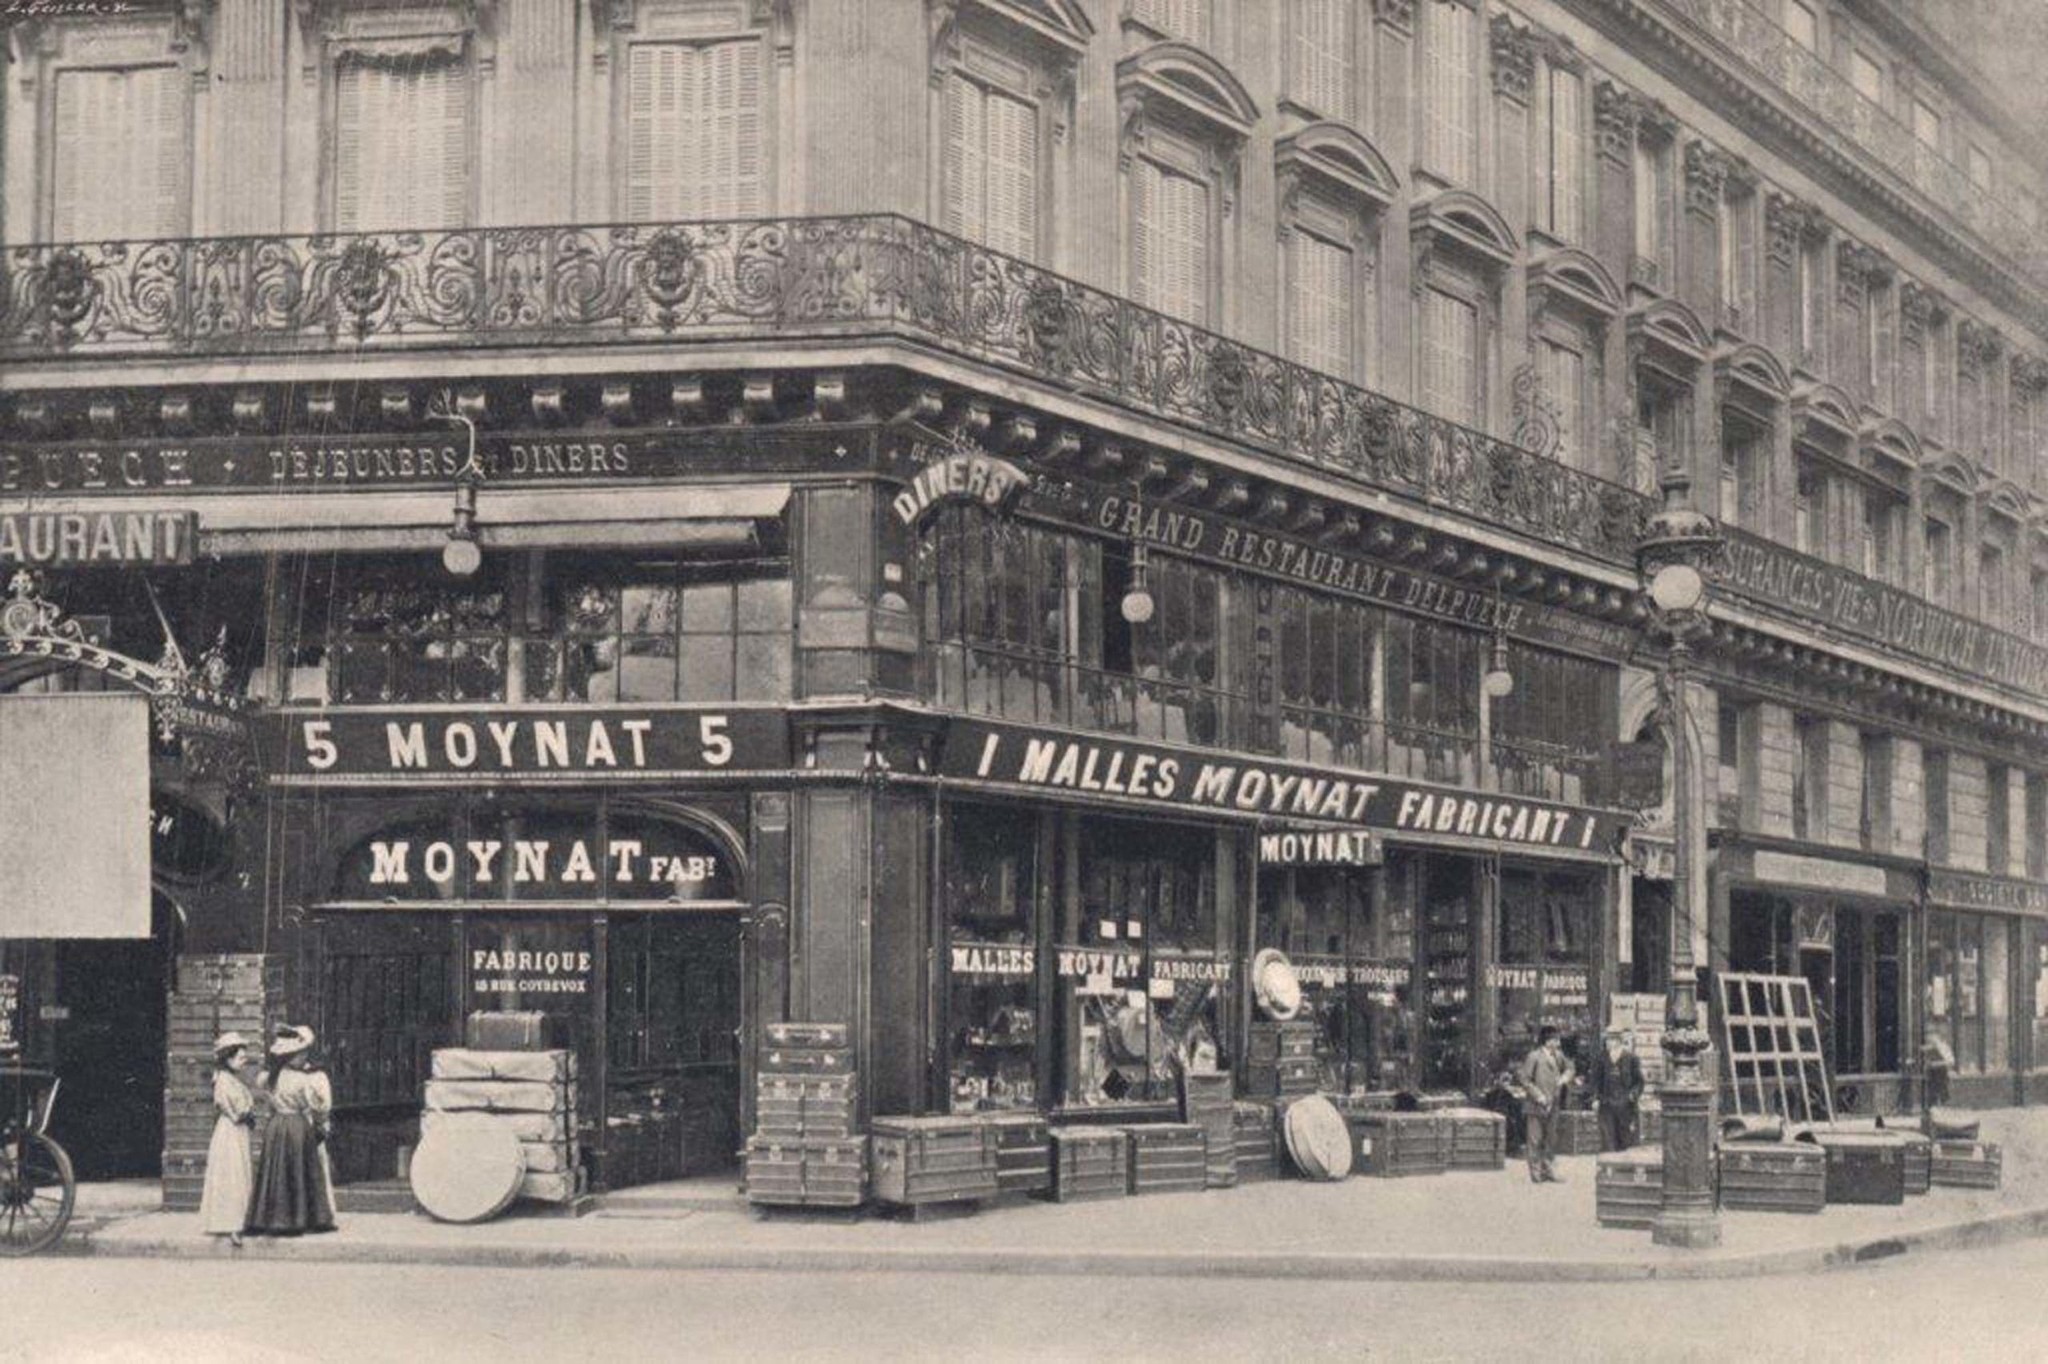 Old boutique. Париж 1907. Авеню опера Париж. Moynat. Лучшие отели Испании в 1907 году.